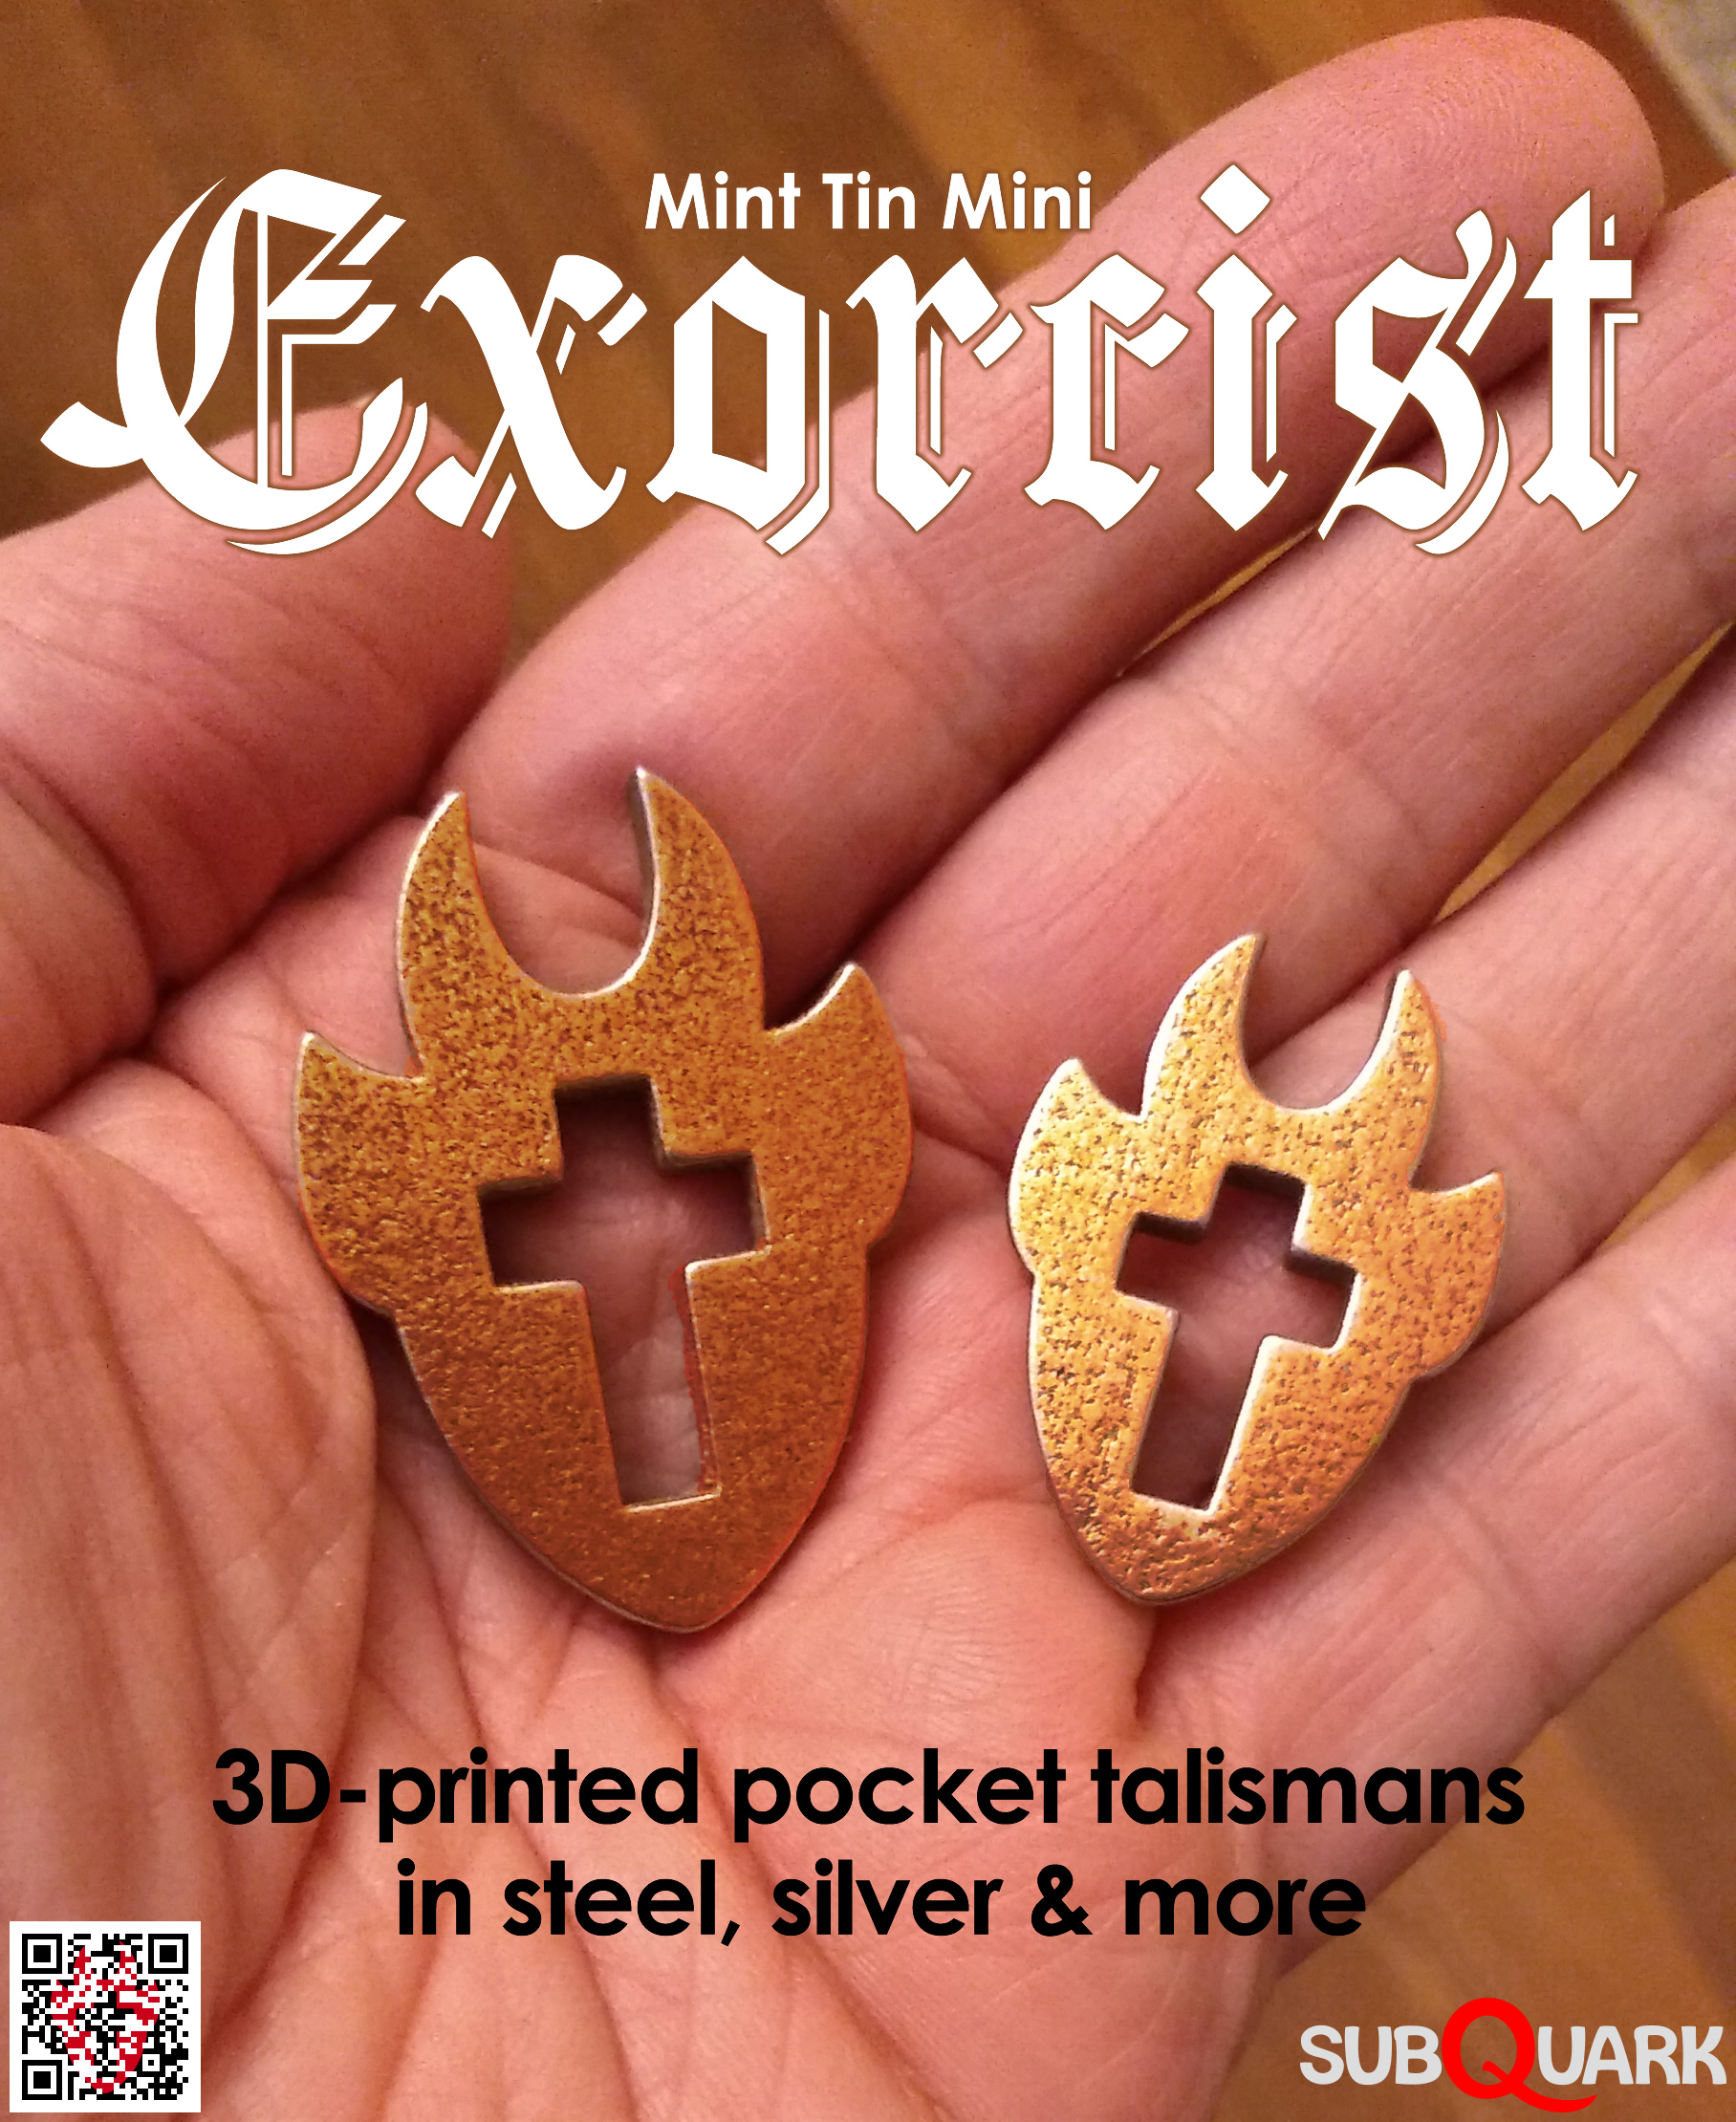 Mint Tin Mini Excorcist 3D talismans